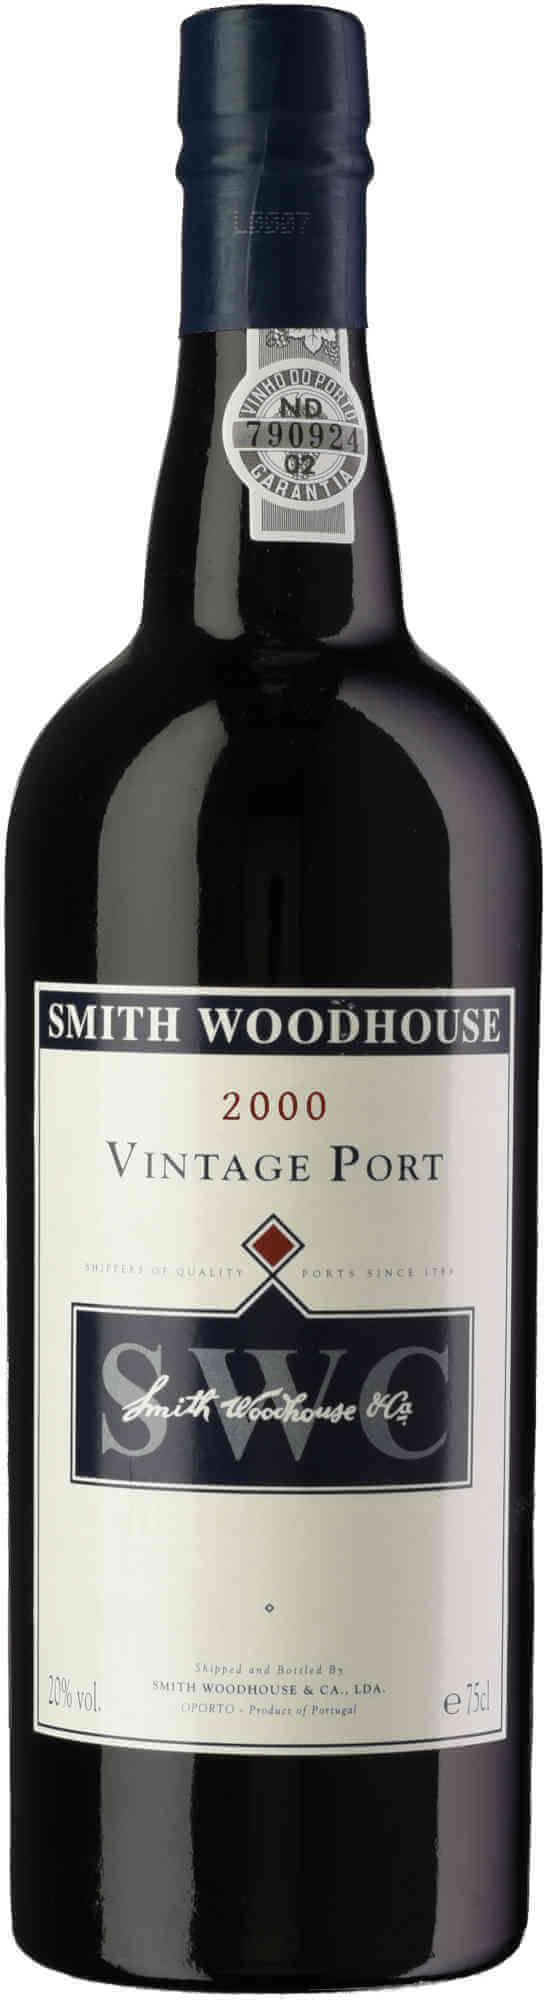 Smith-Woodhouse-Vintage-Port-2000